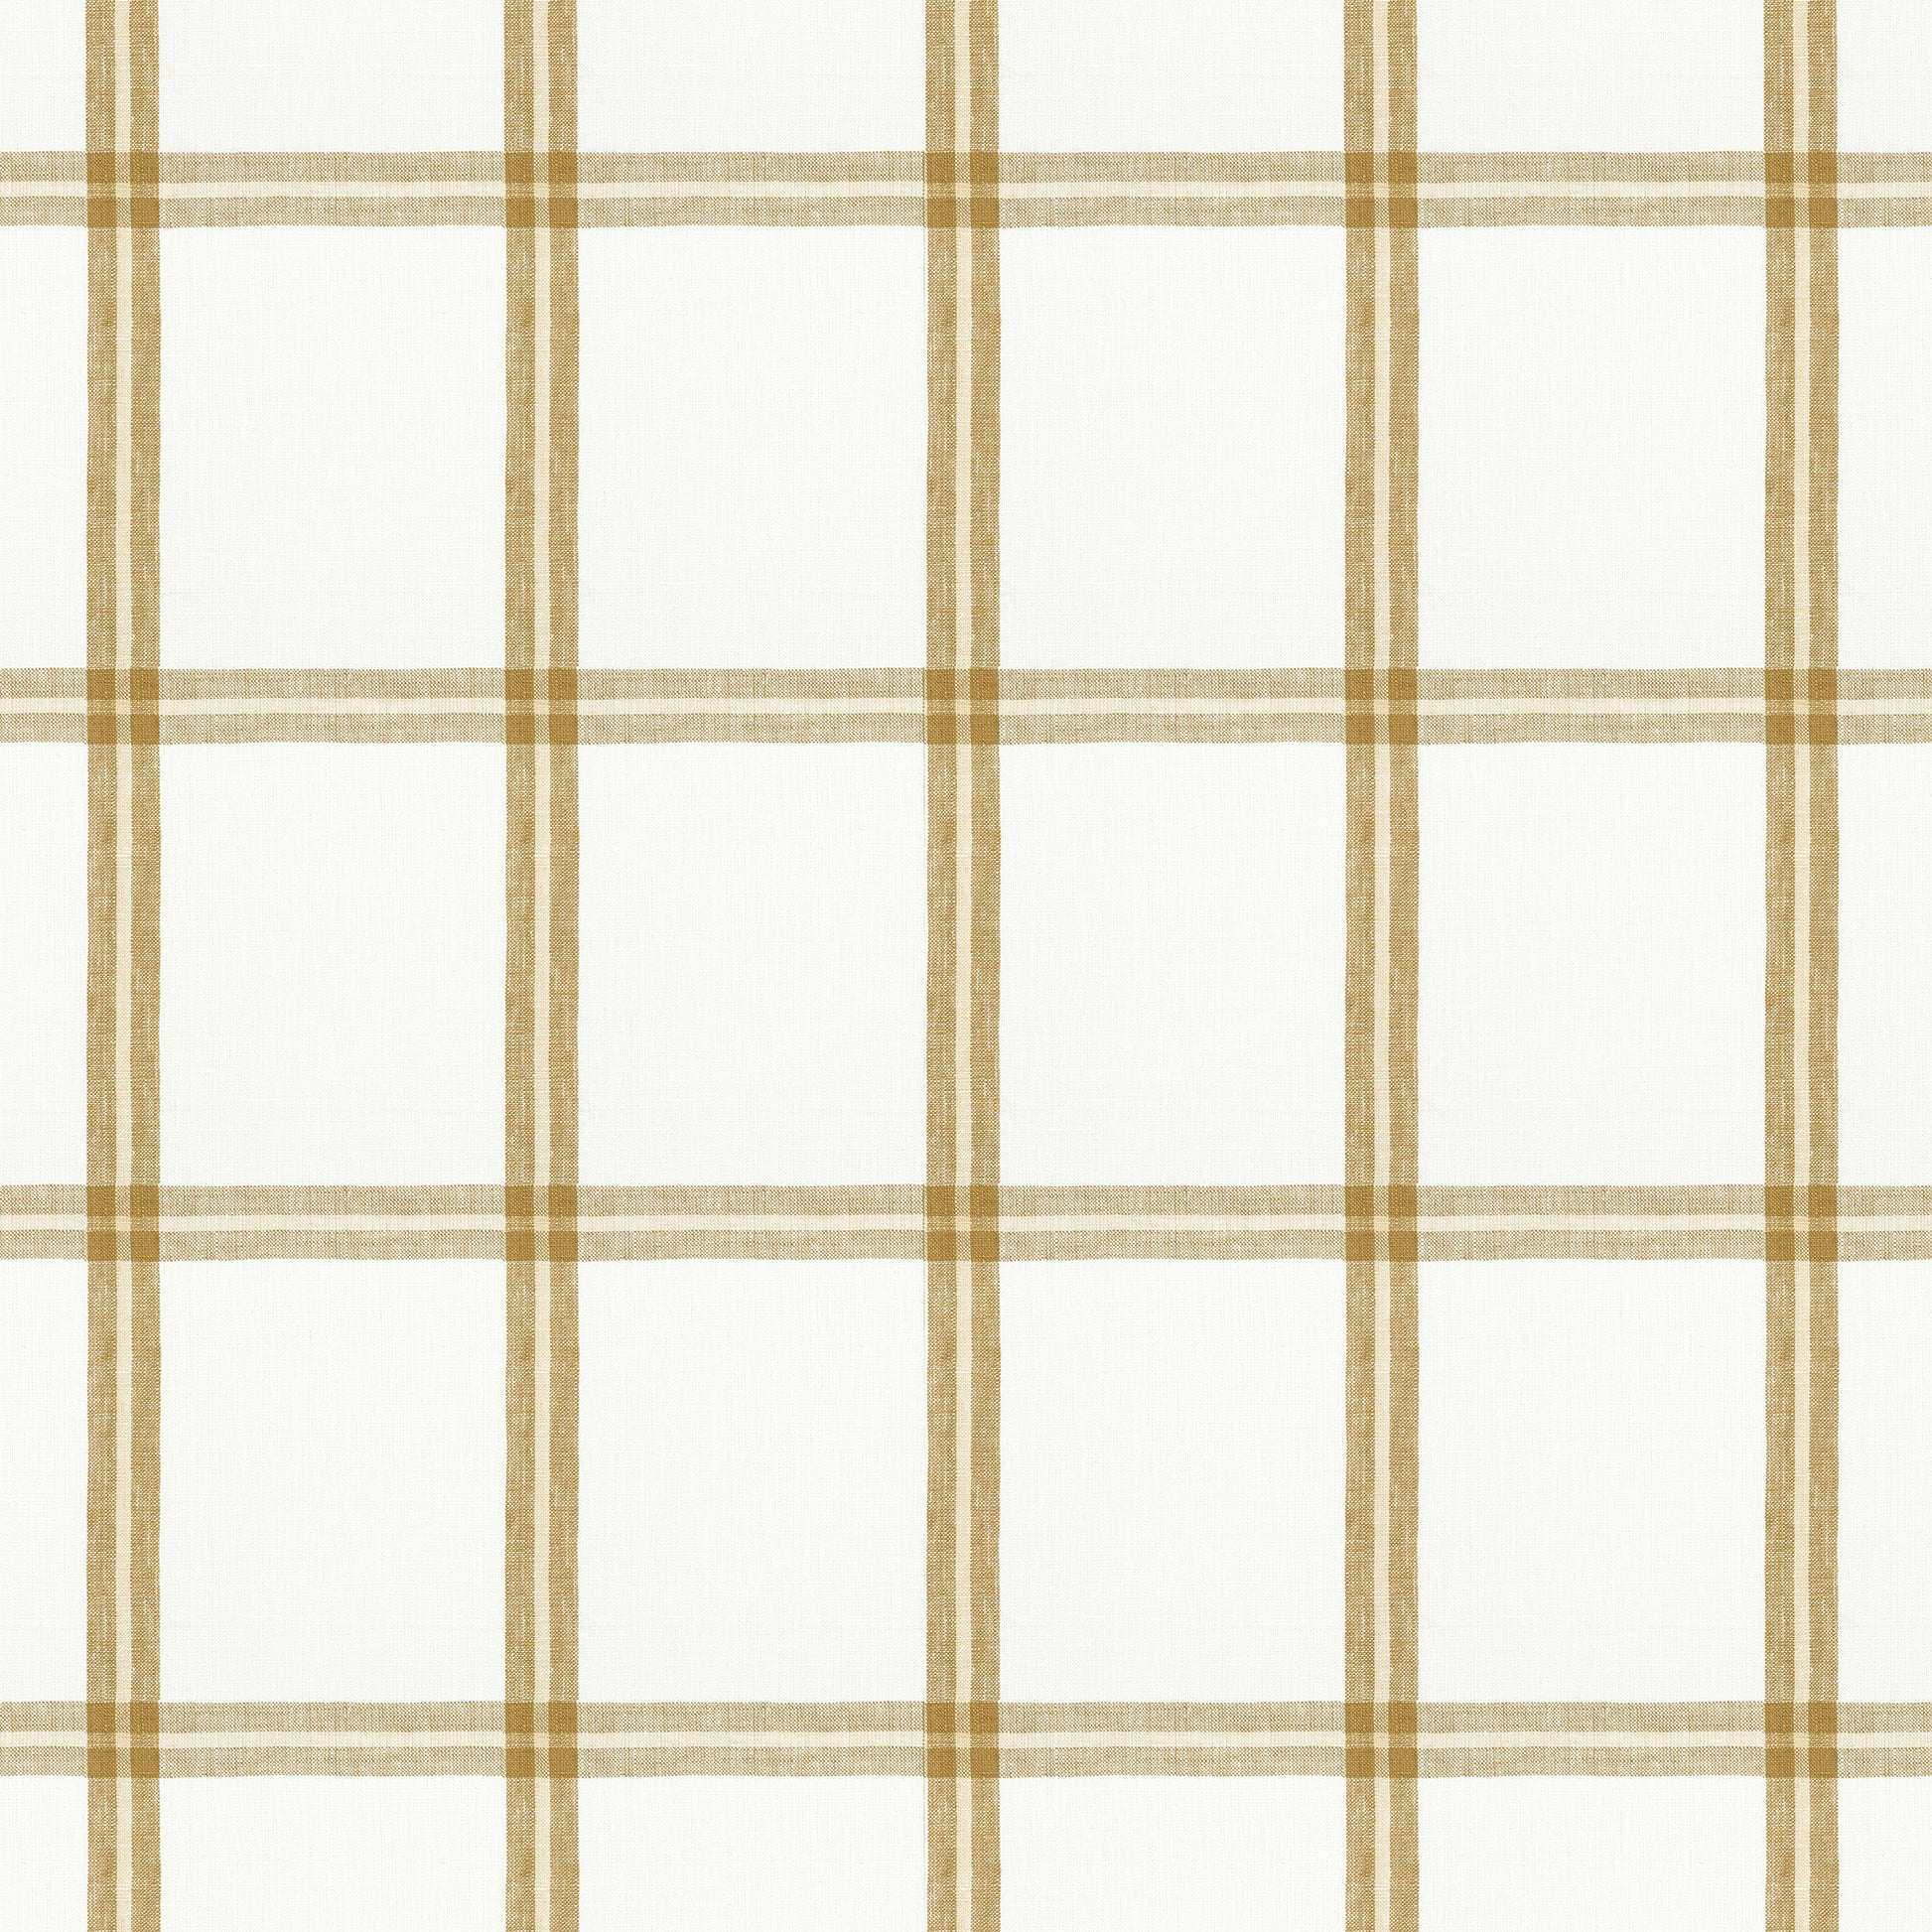 Purchase Thibaut Fabric Item# W781333 pattern name Huntington Plaid color Camel